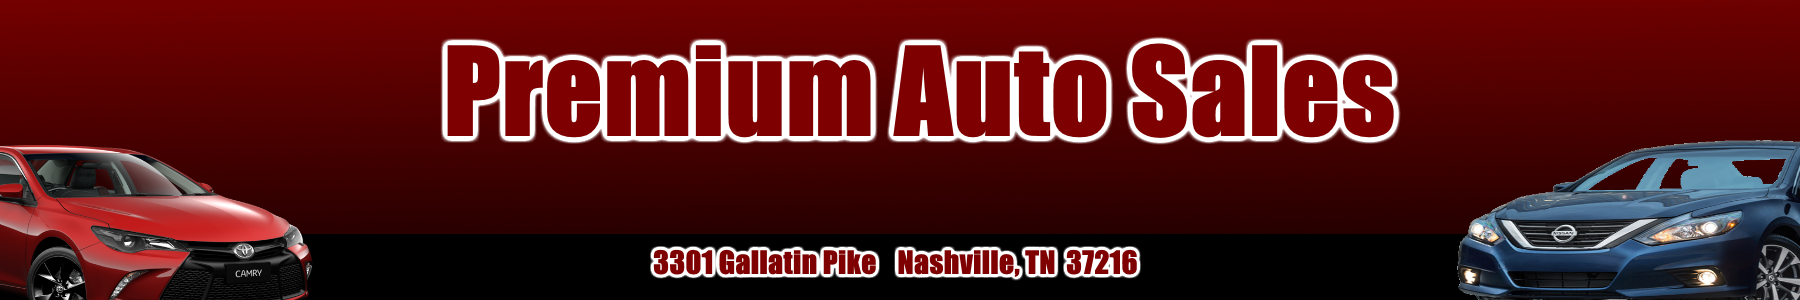 Premium Auto Sales LLC a Quality Used Car Dealer